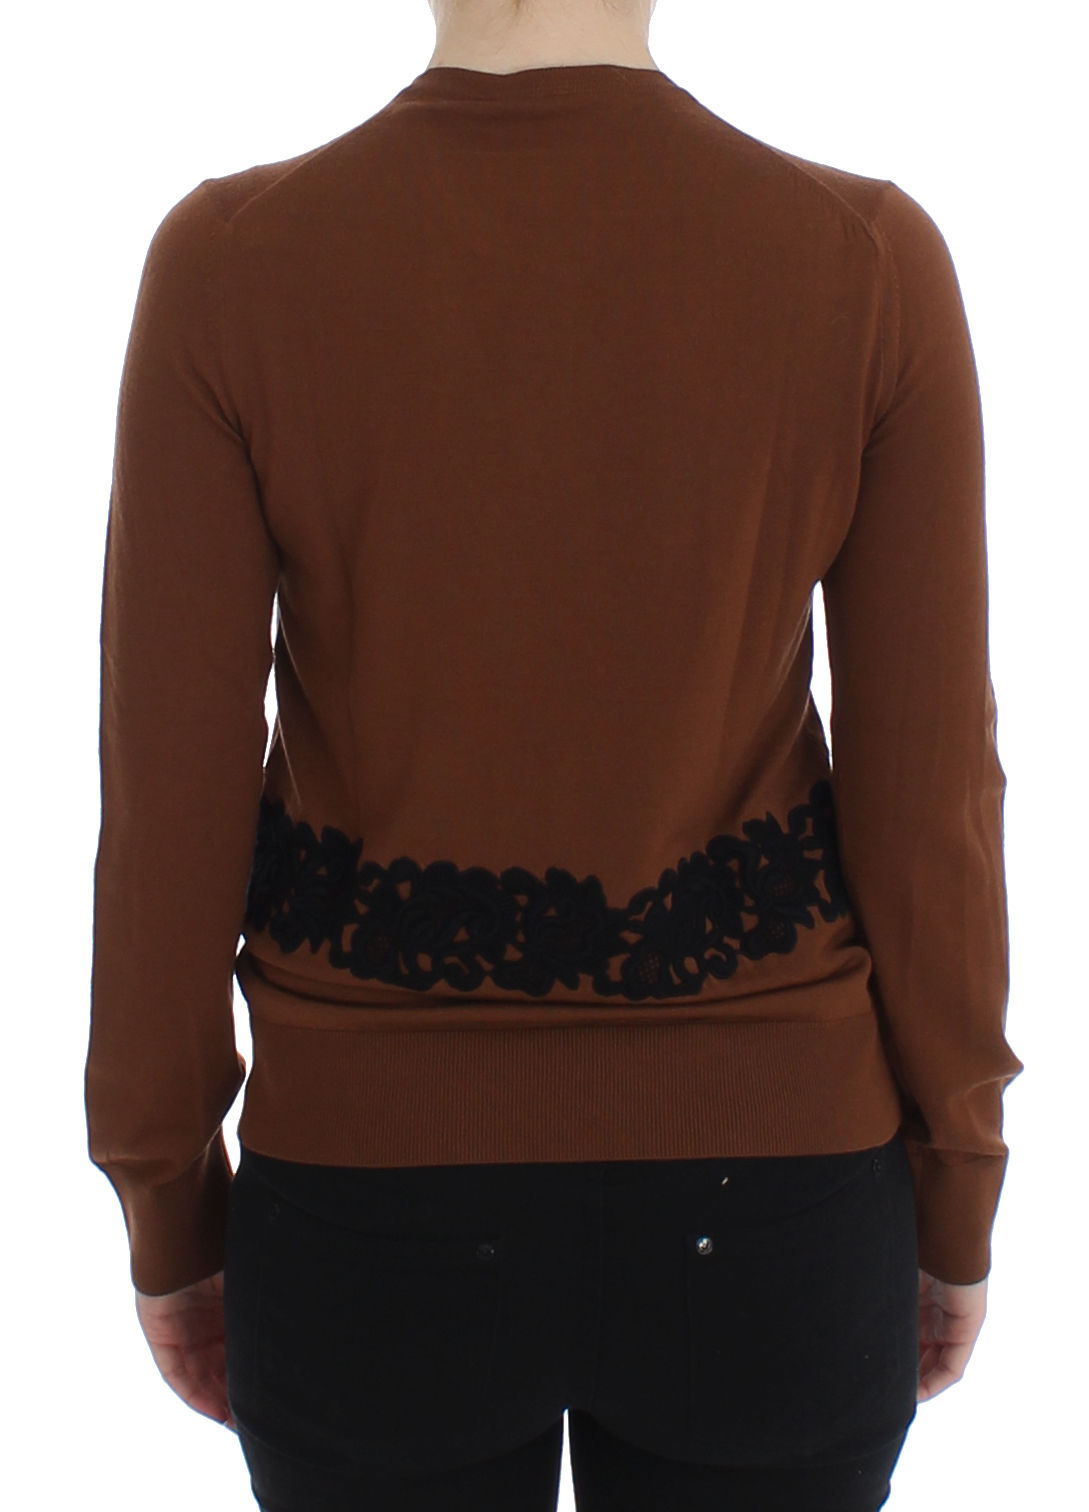 Brown Wool Black Lace Cardigan Sweater